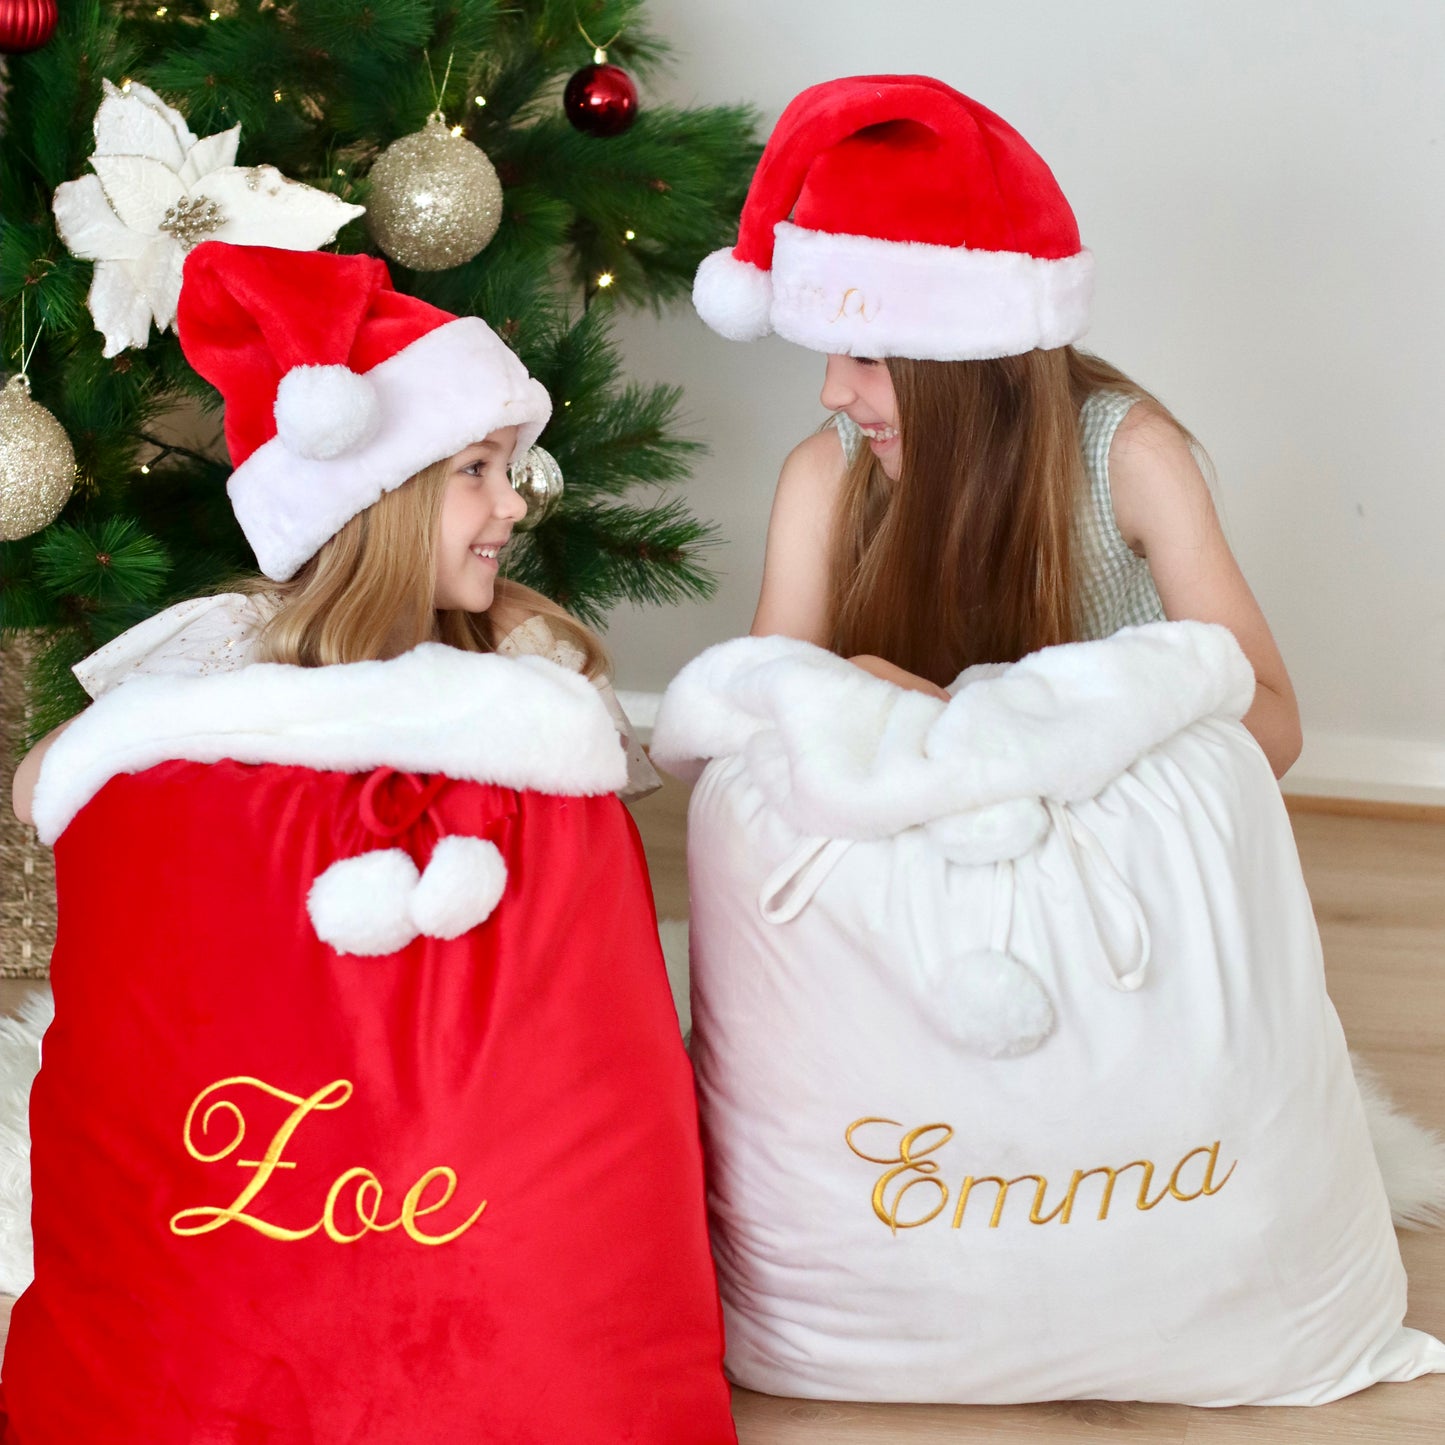 These personalised santa sacks are perfect as a keepsake